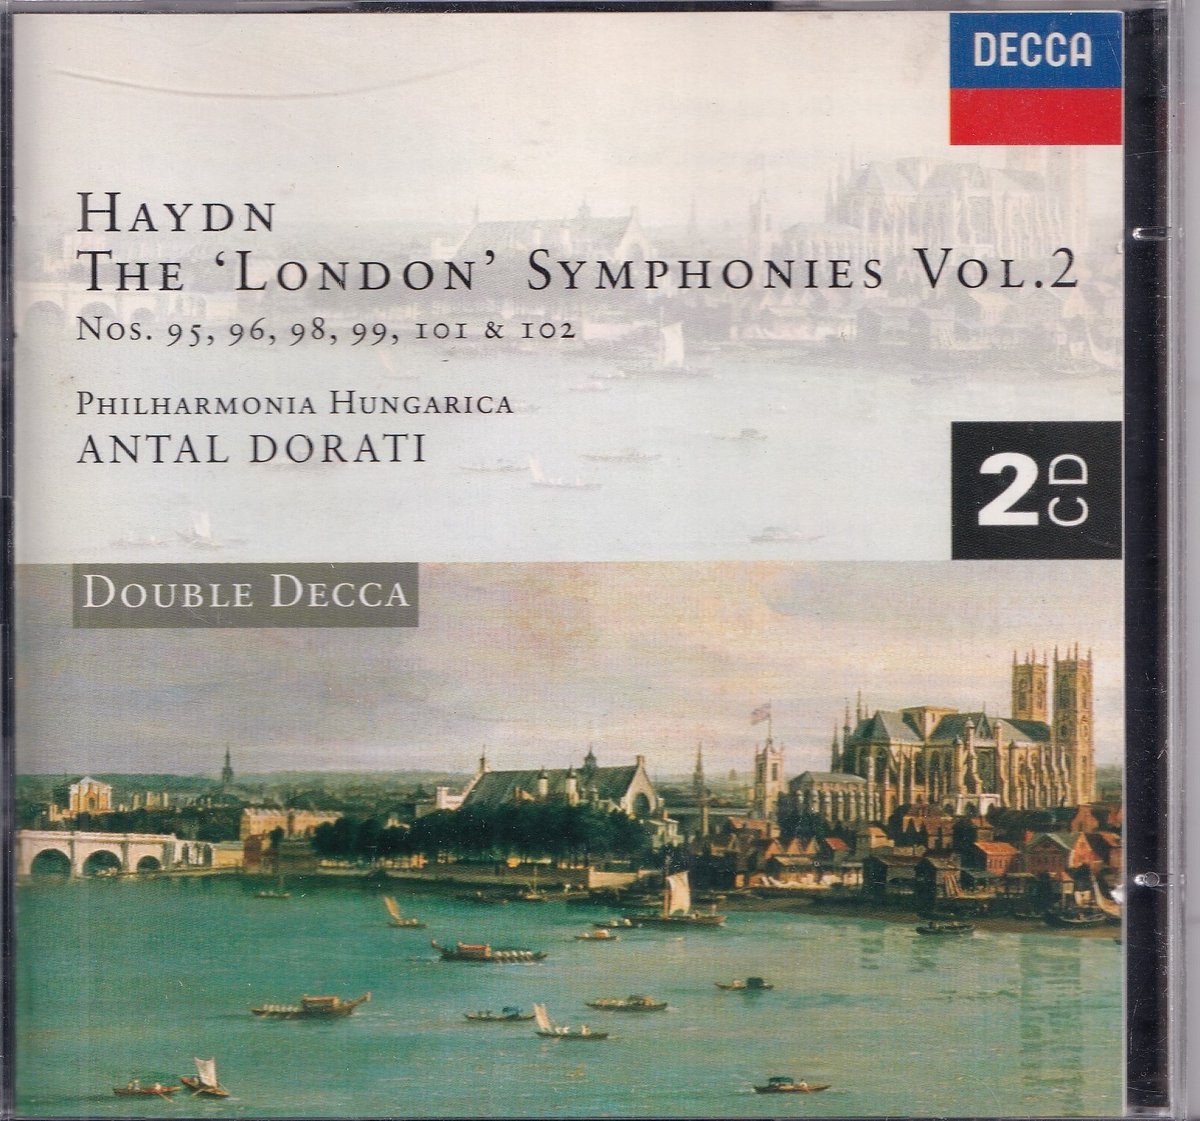 London Symphonies Vol.2 - Philharmonia Hungarica o.l.v. Antal Dorati